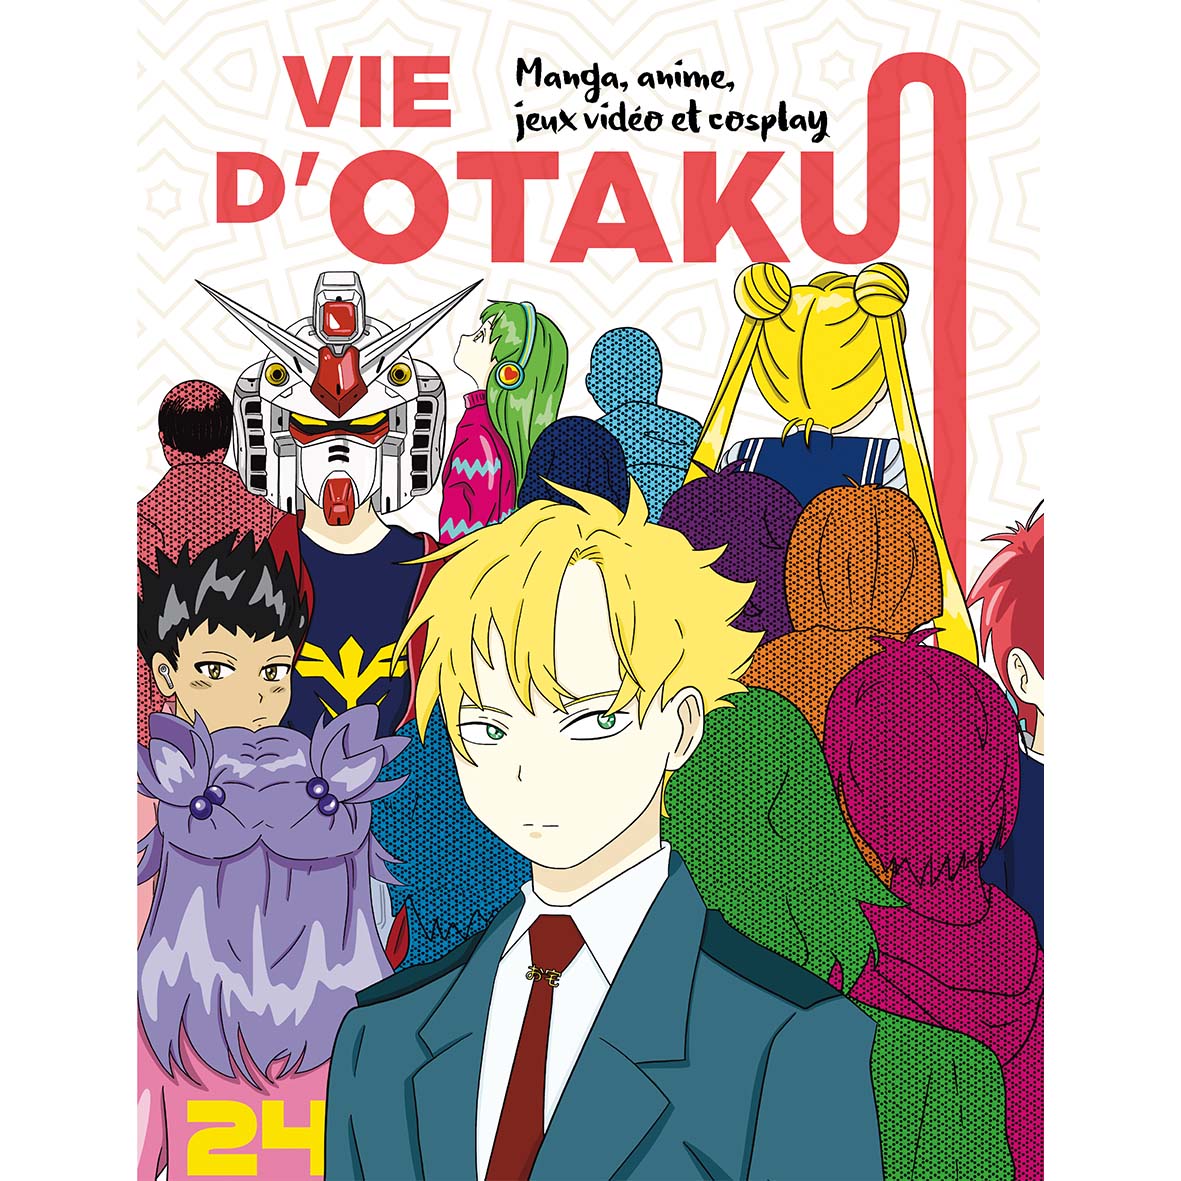 Vie d'Otaku - Manga, anime, jeux vidéo et cosplay